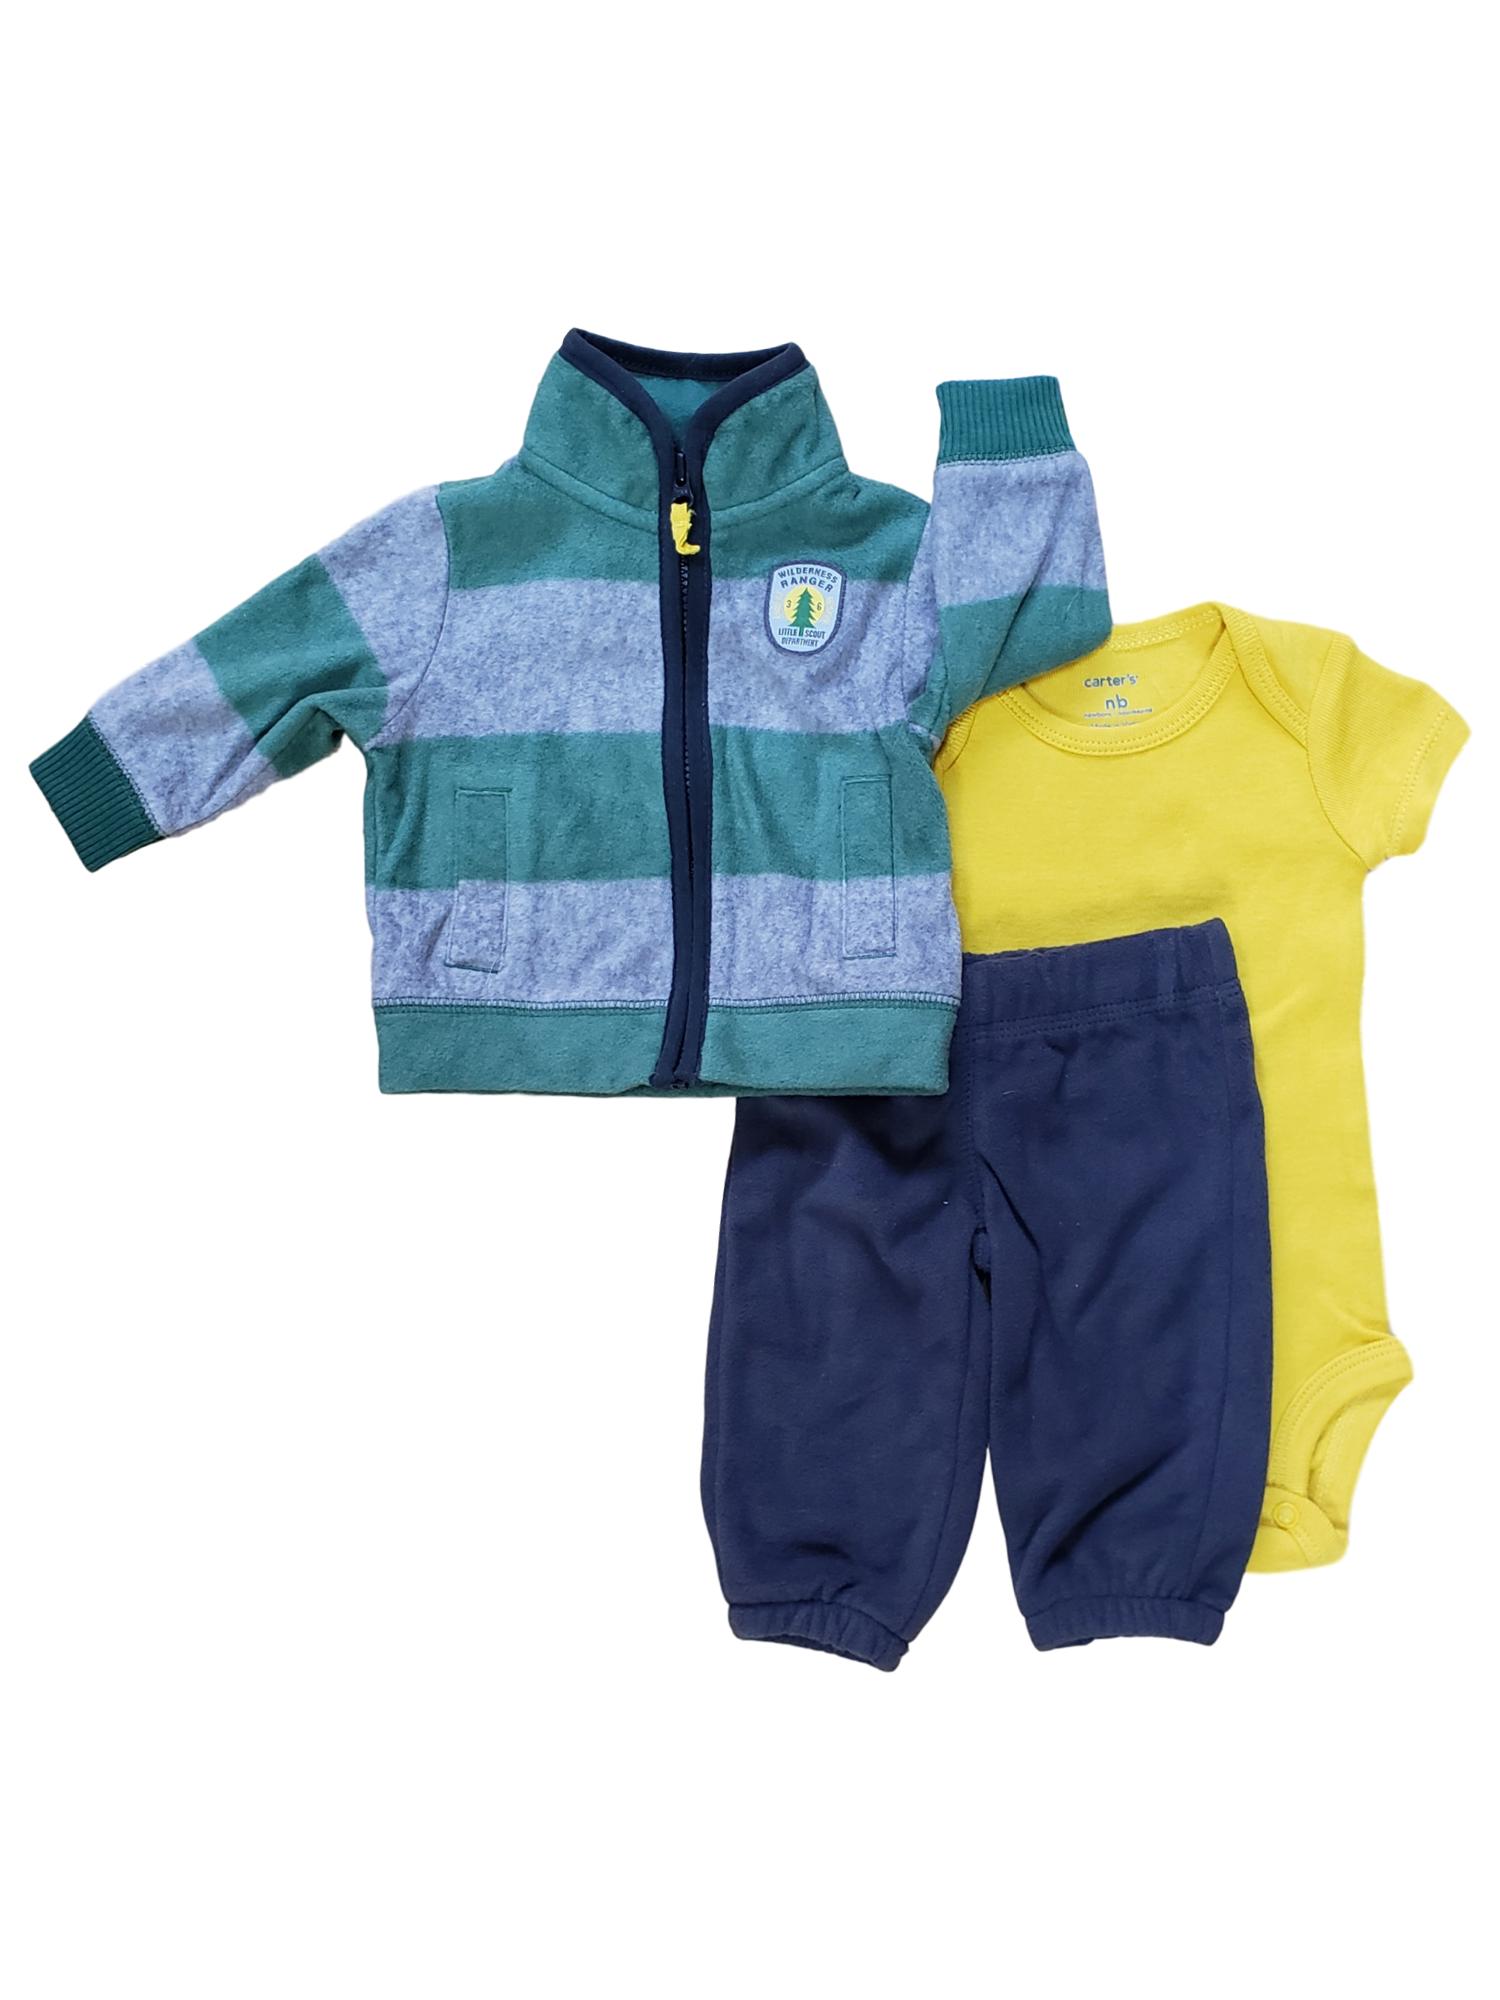 Carter's Carters Infant Baby Boys Green Fleece Jacket Pant & Cotton Bodysuit 3 Pc Set